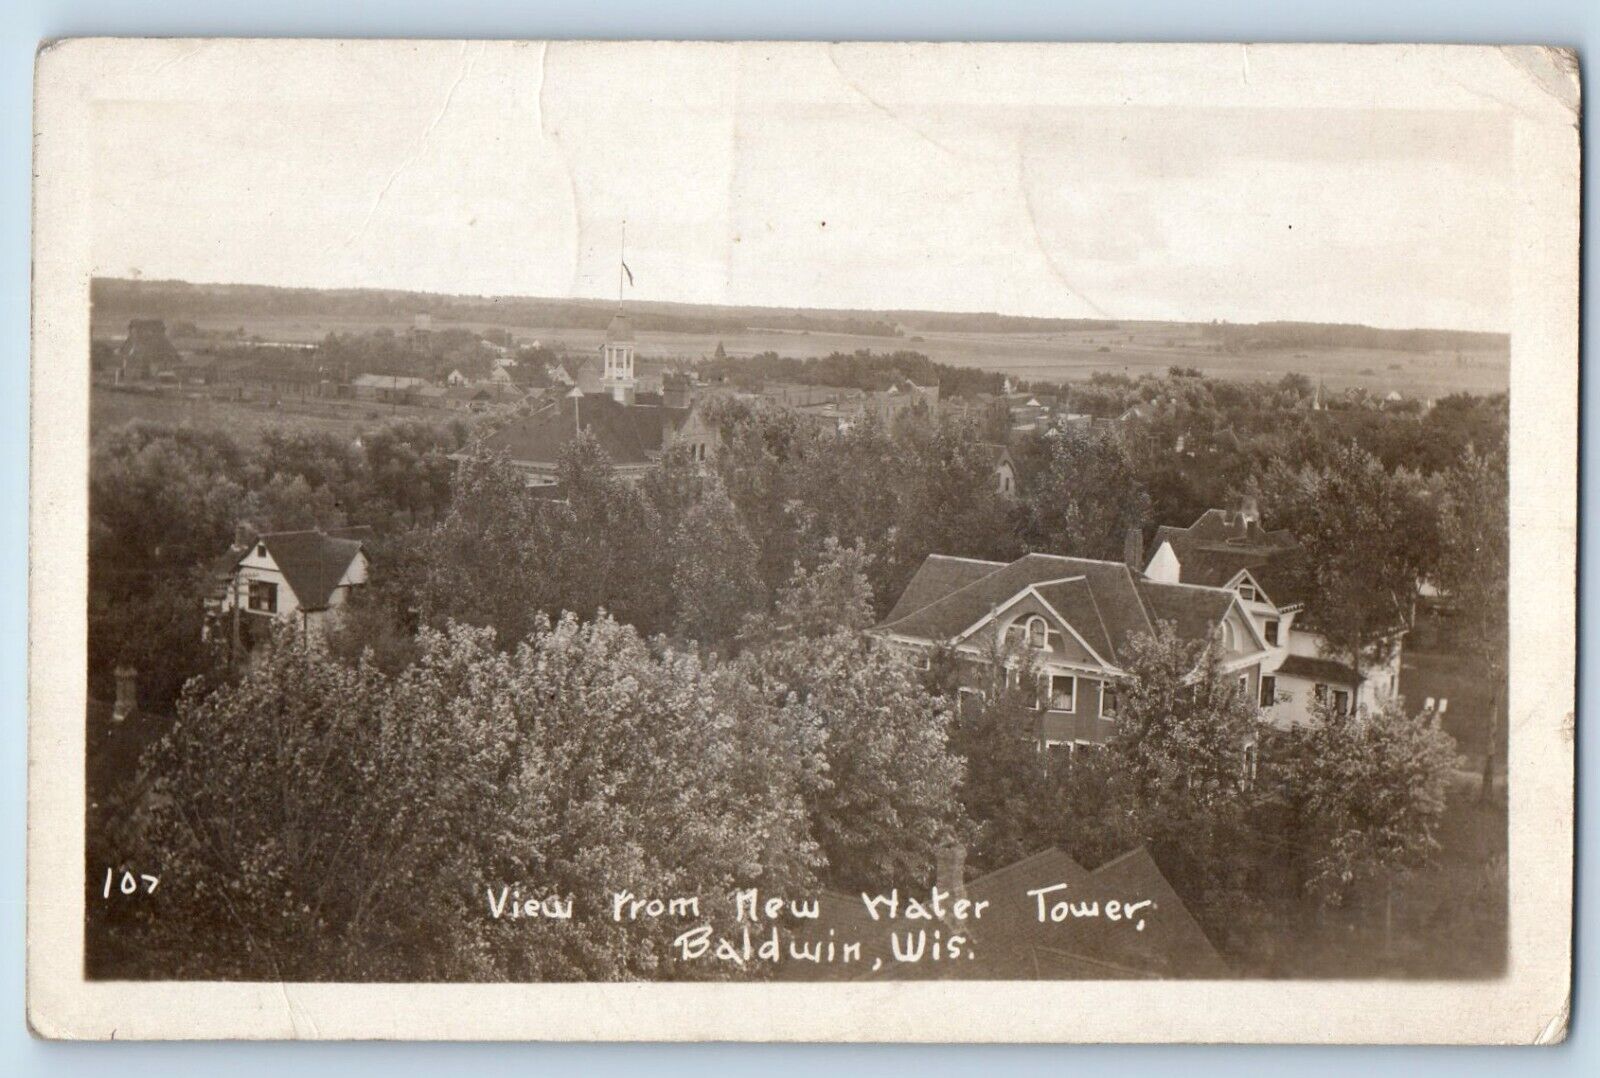 Baldwin Minnesota MN Postcard RPPC Photo View From New Water Tower c1910's